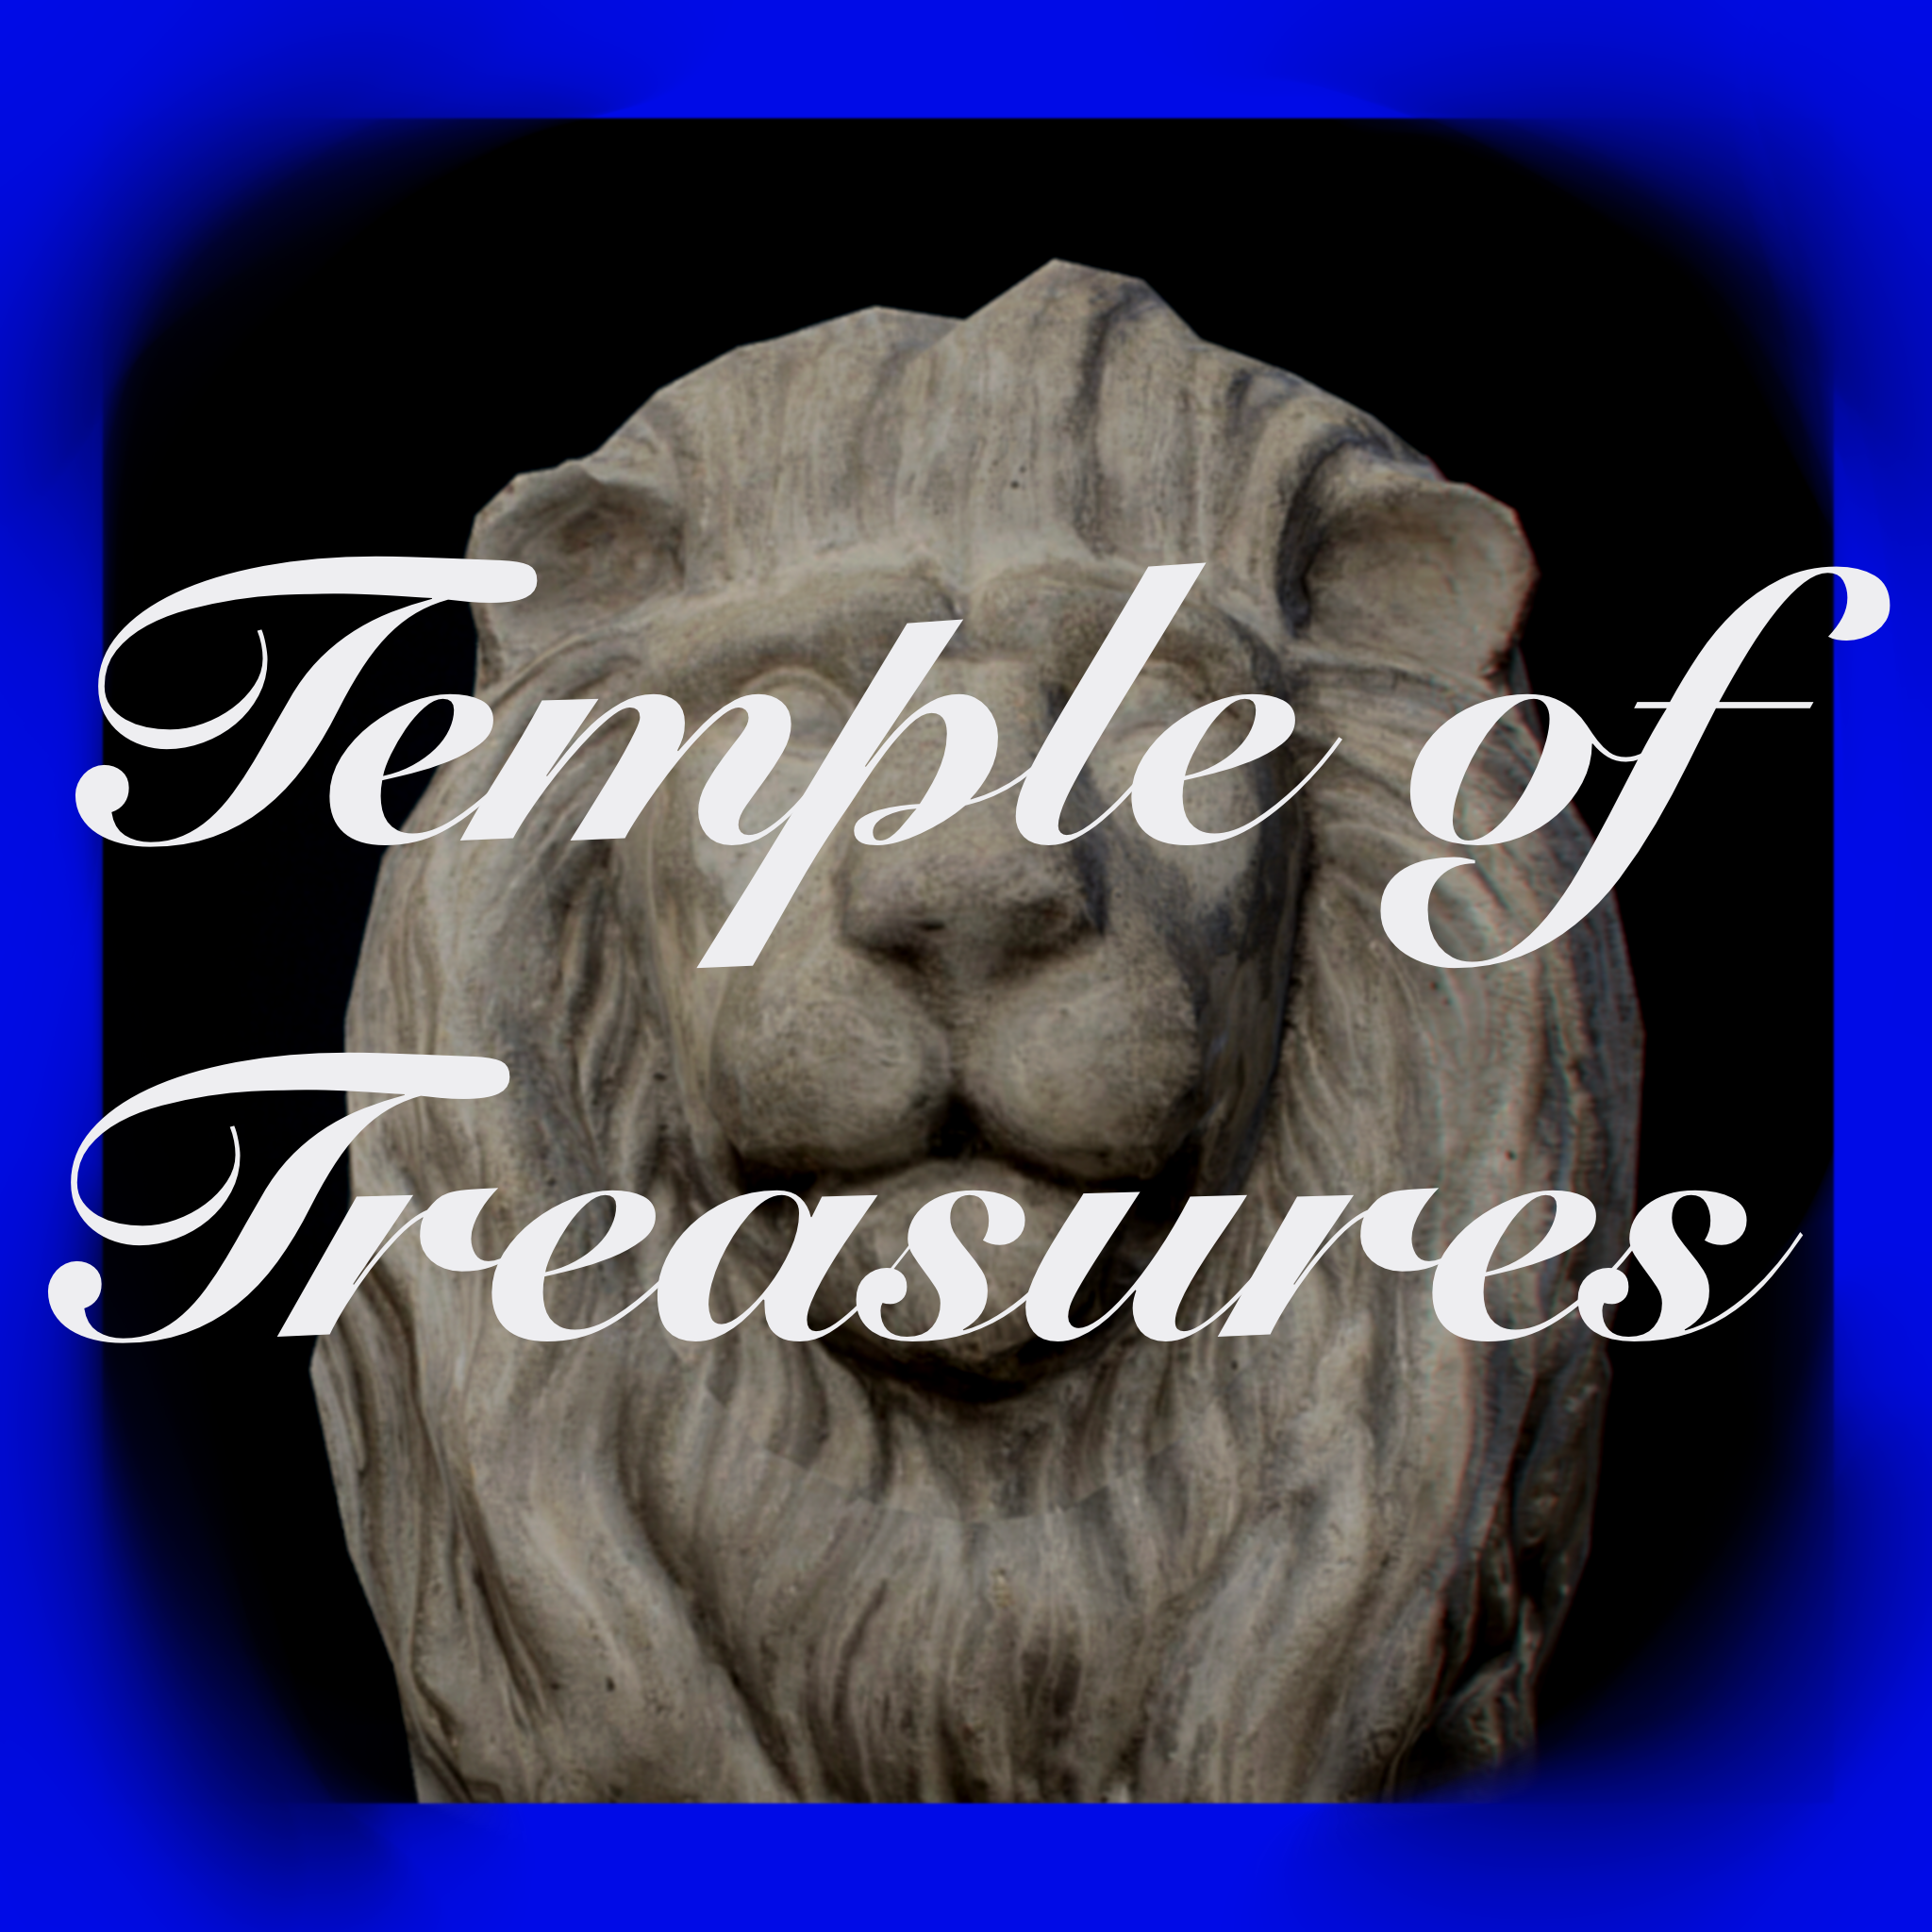 Temple of Treasures